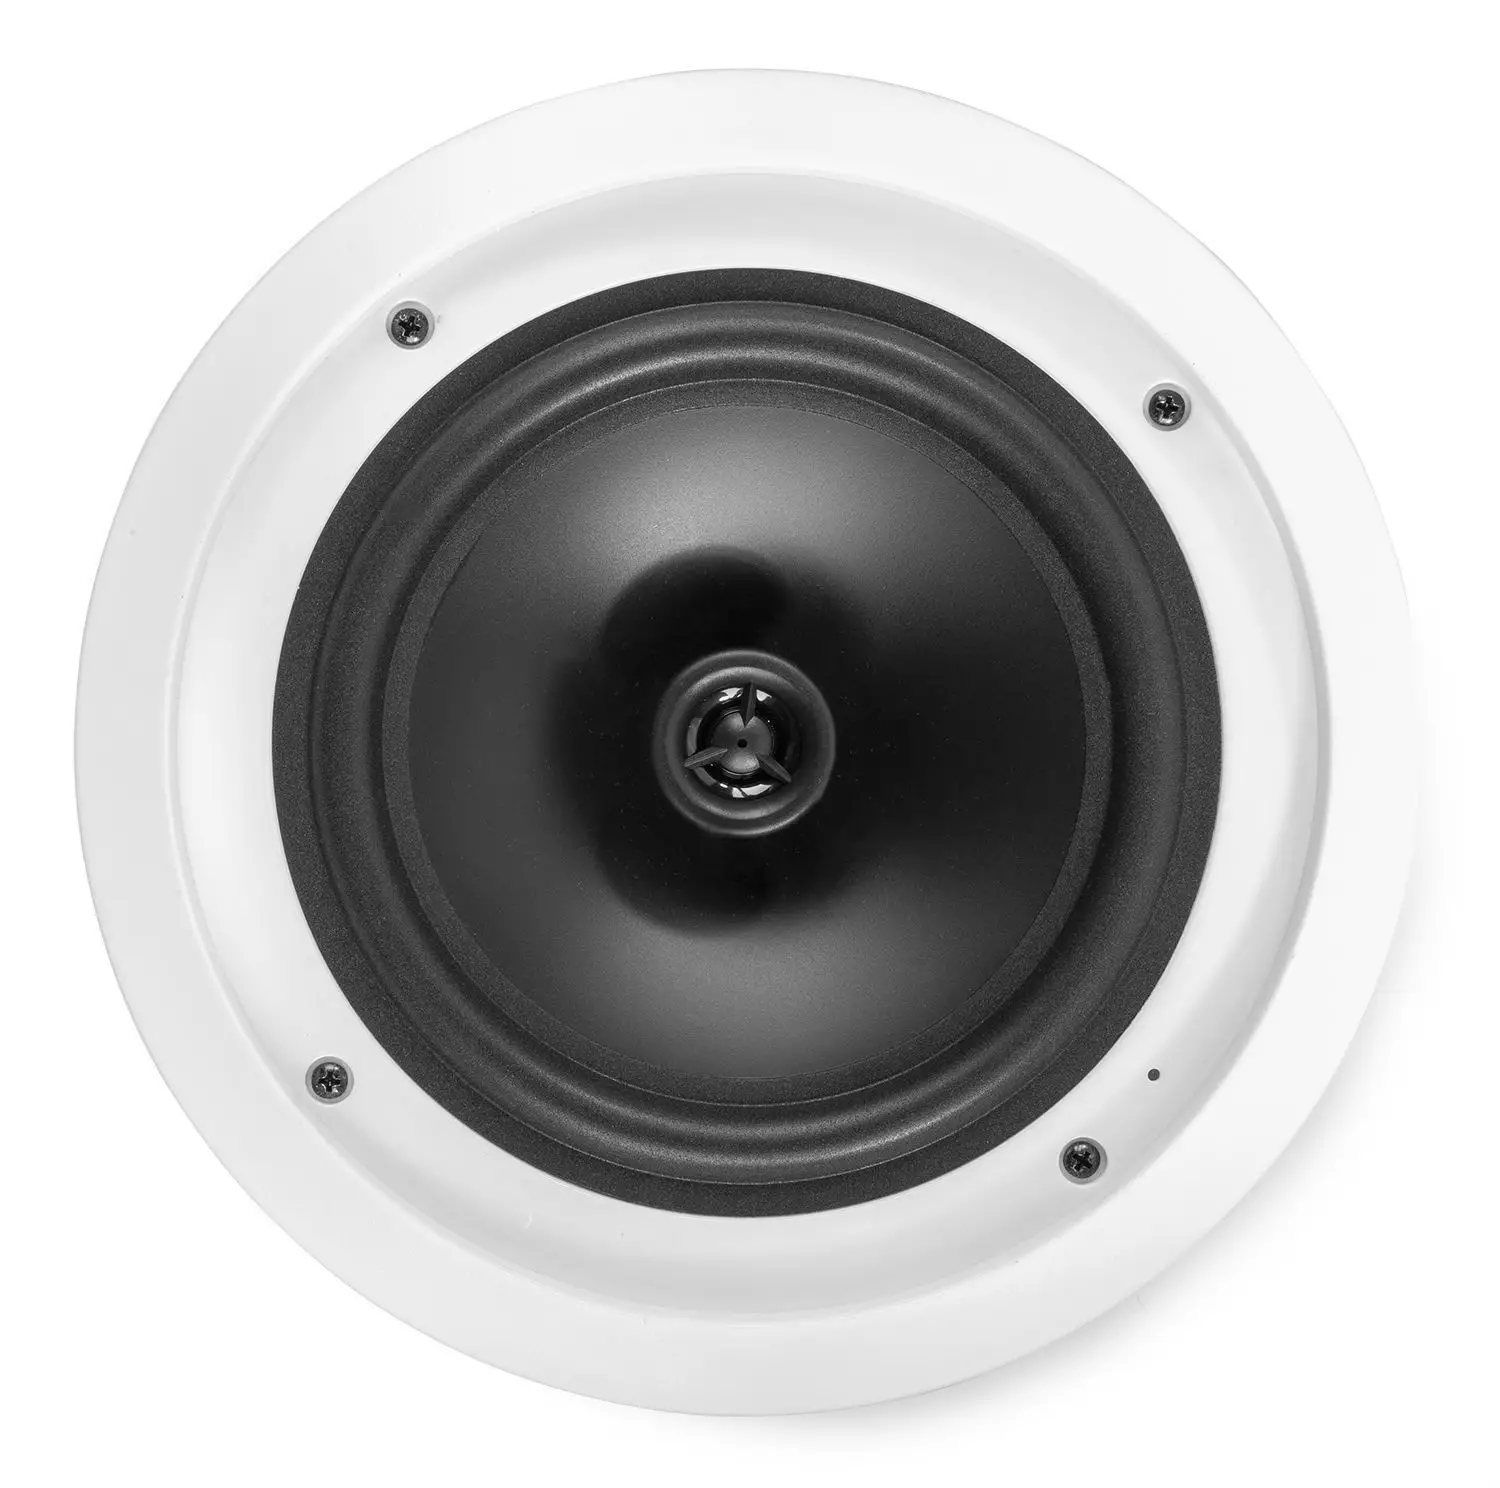 Retourdeal power dynamics cssg8 alu plafond speaker 8 100w 6